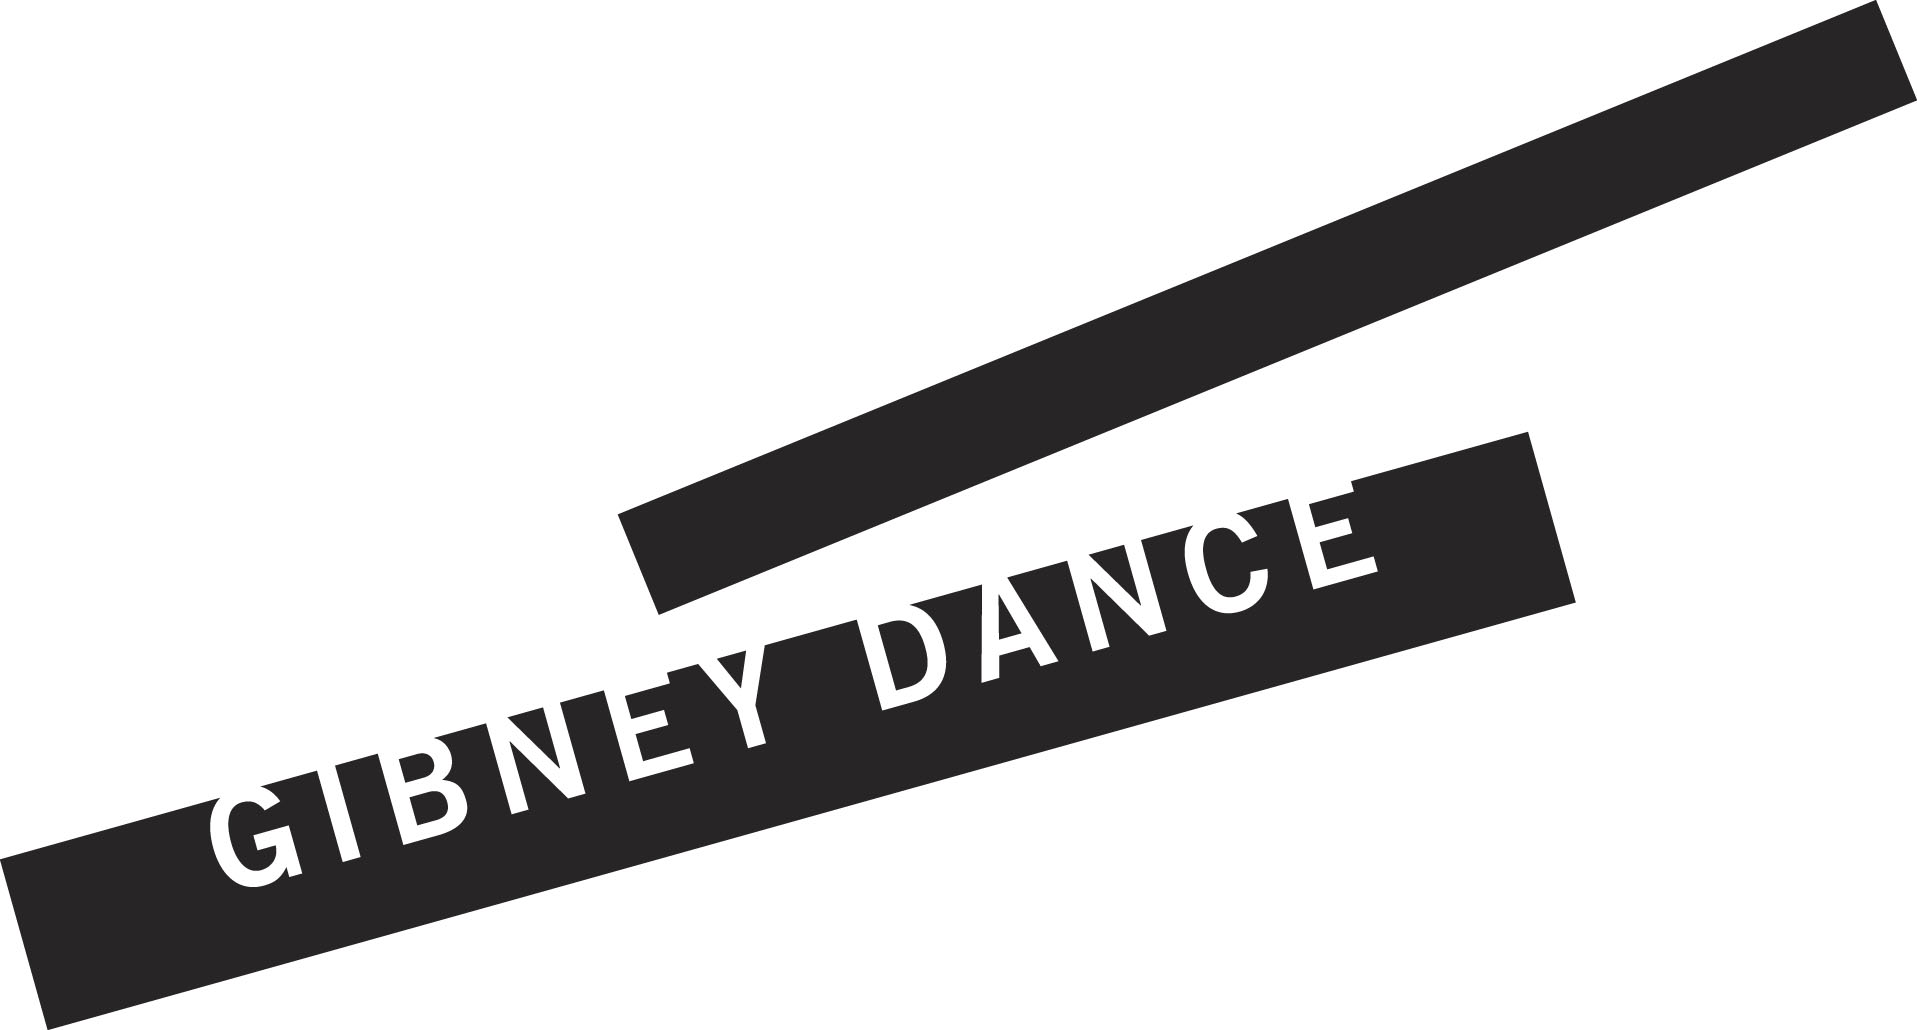 Gibney logo